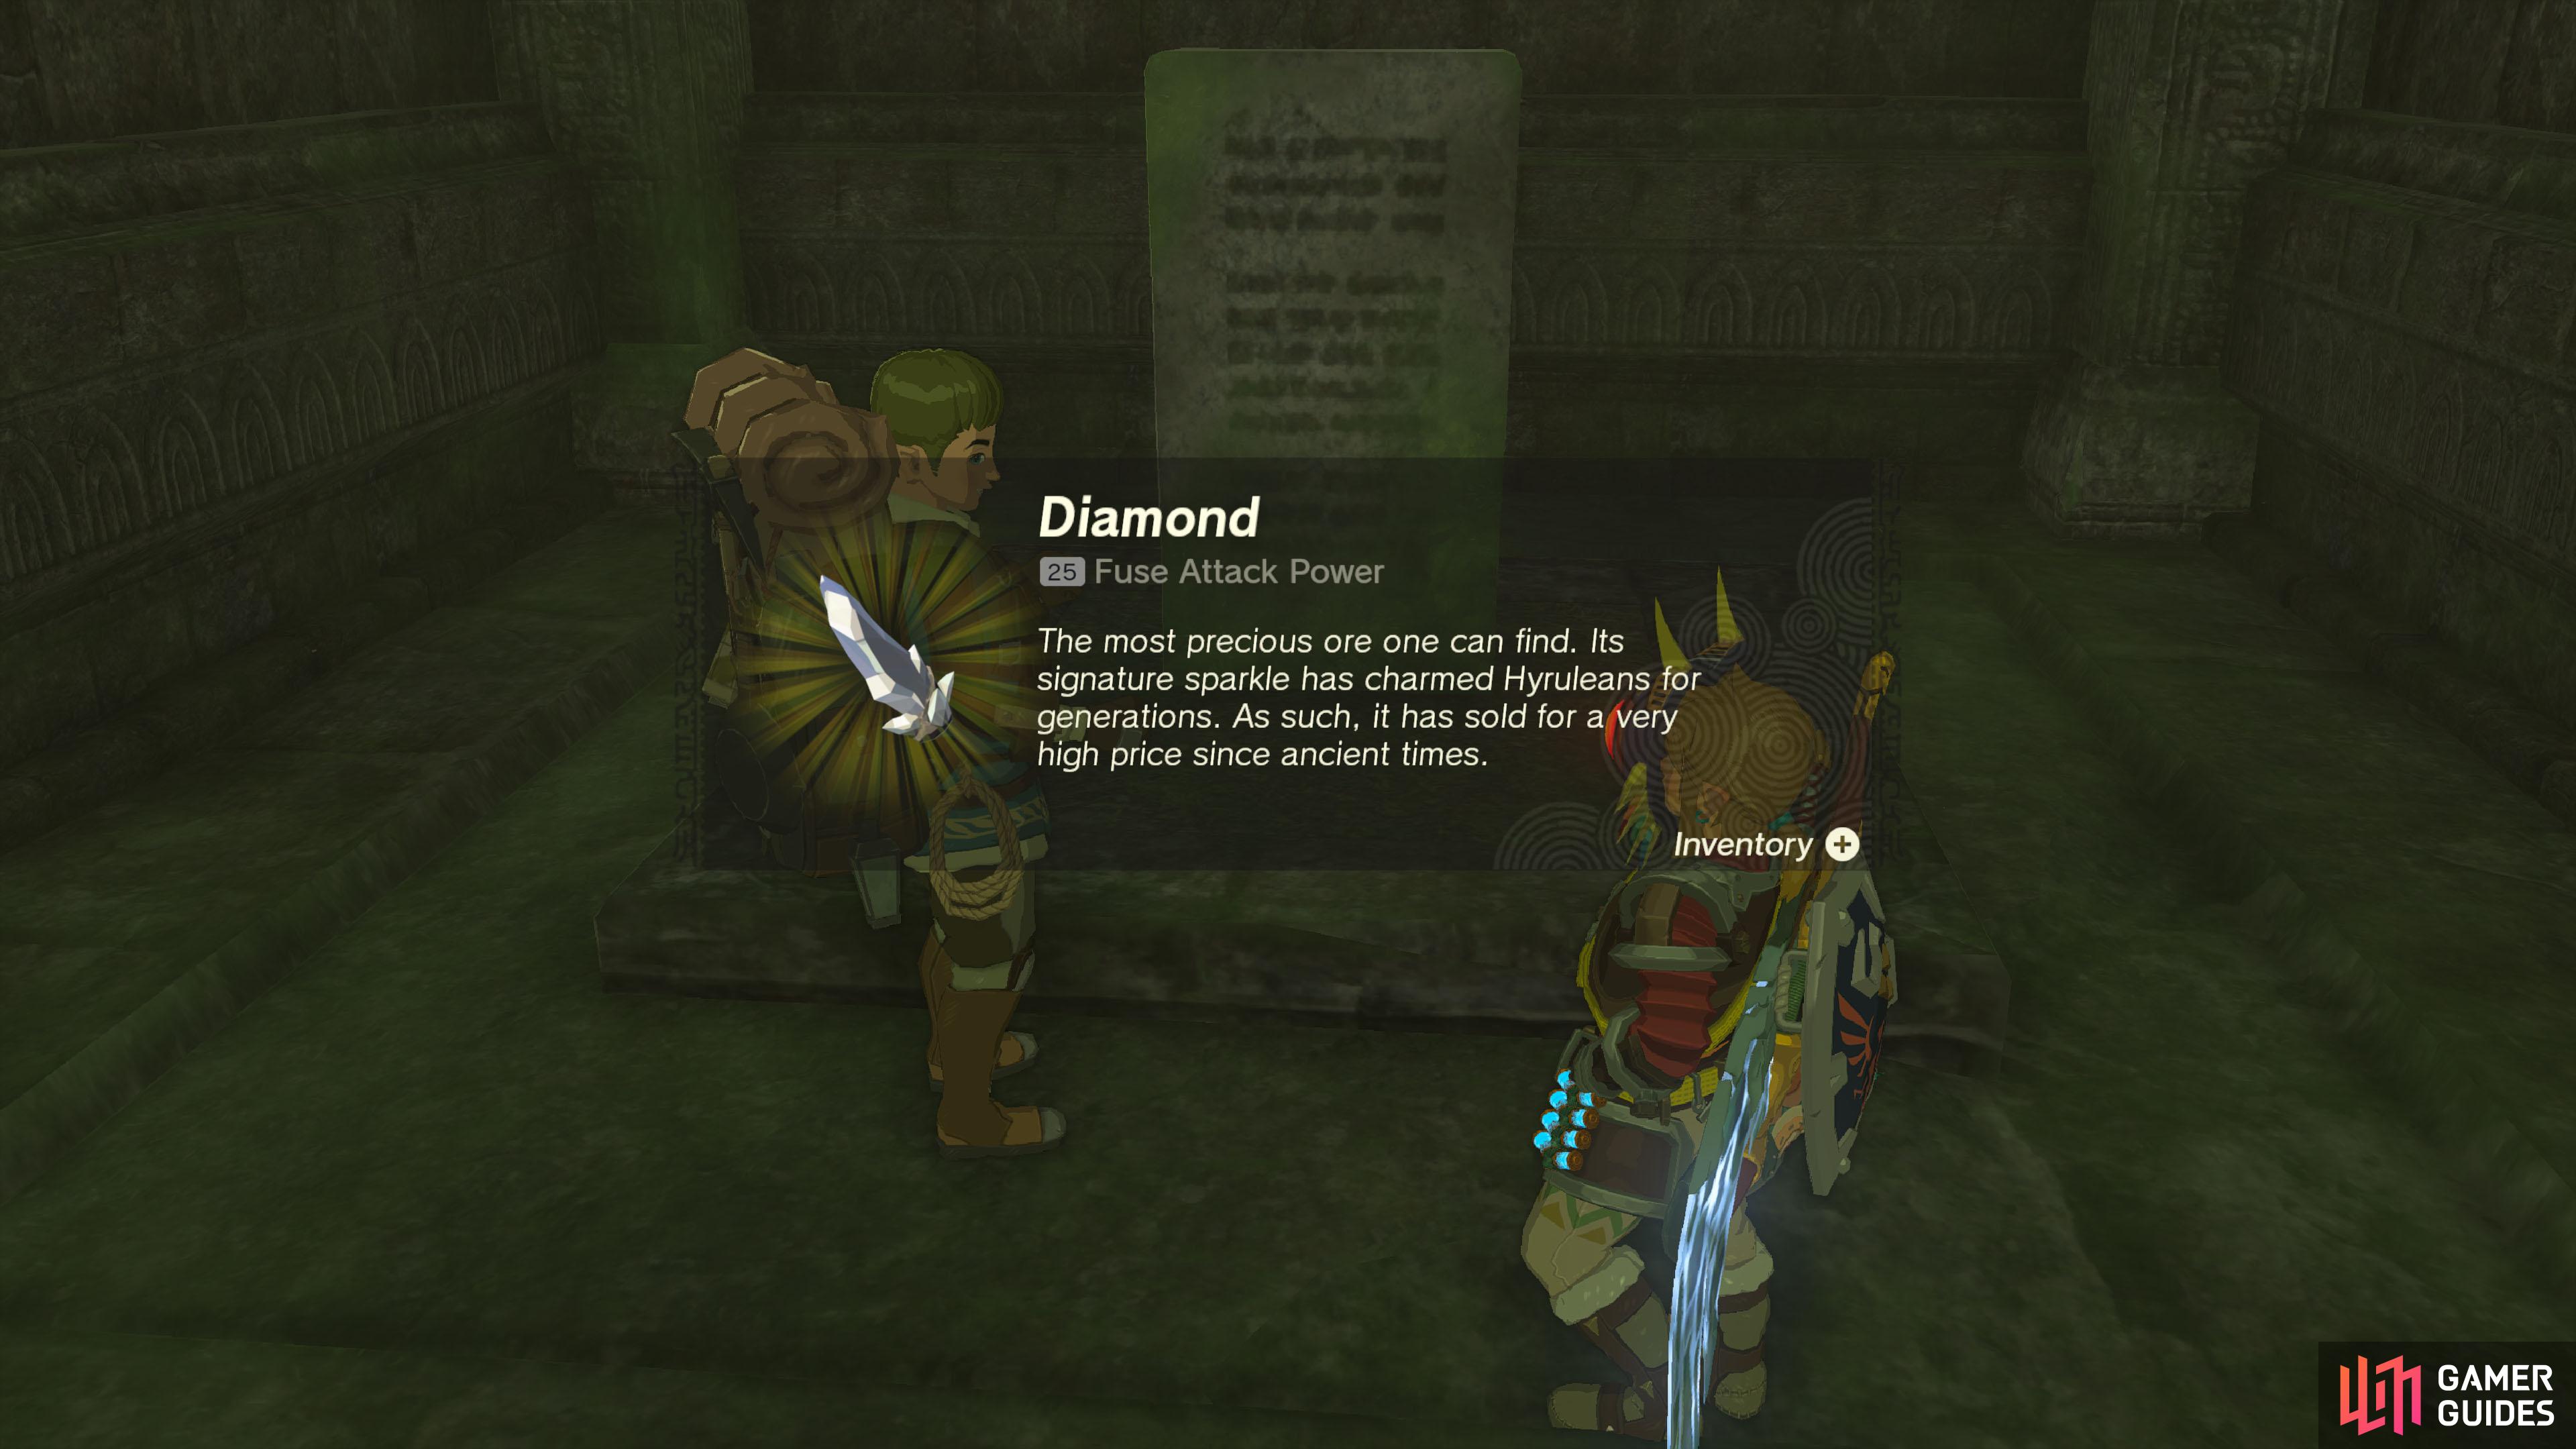 Chickaloo - The Legend of Zelda: Tears of the Kingdom Database